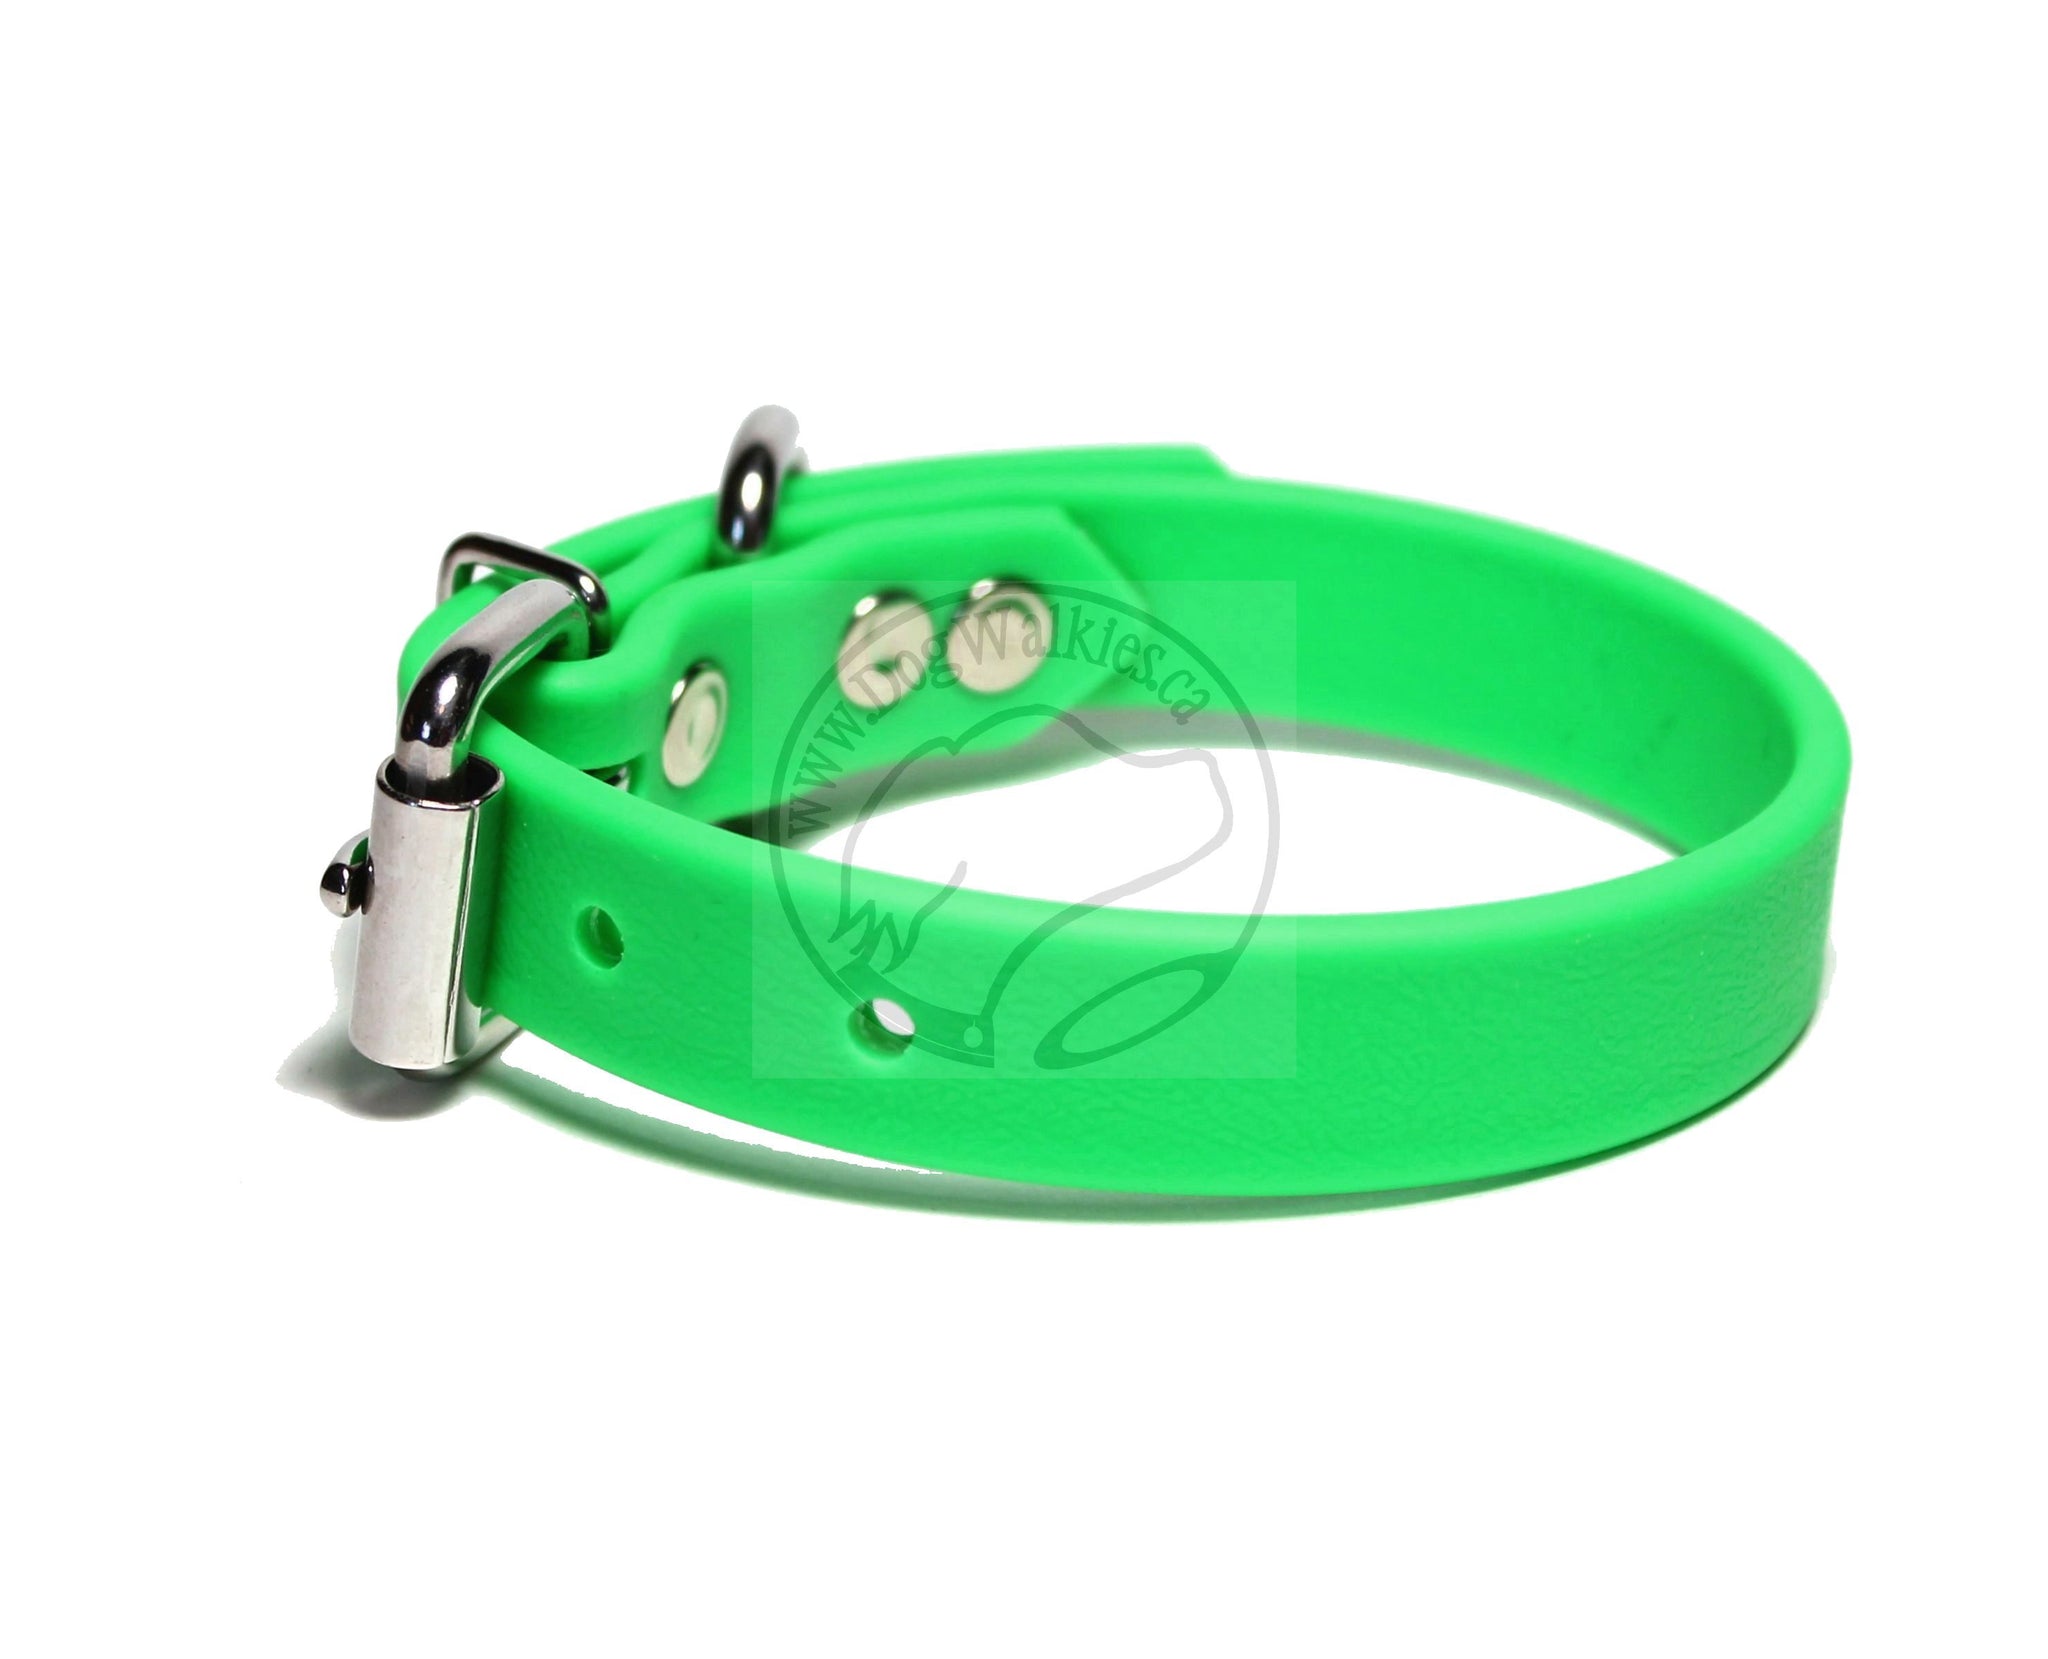 Neon Apple Green Biothane Dog Collar - 3/4" (20mm) wide